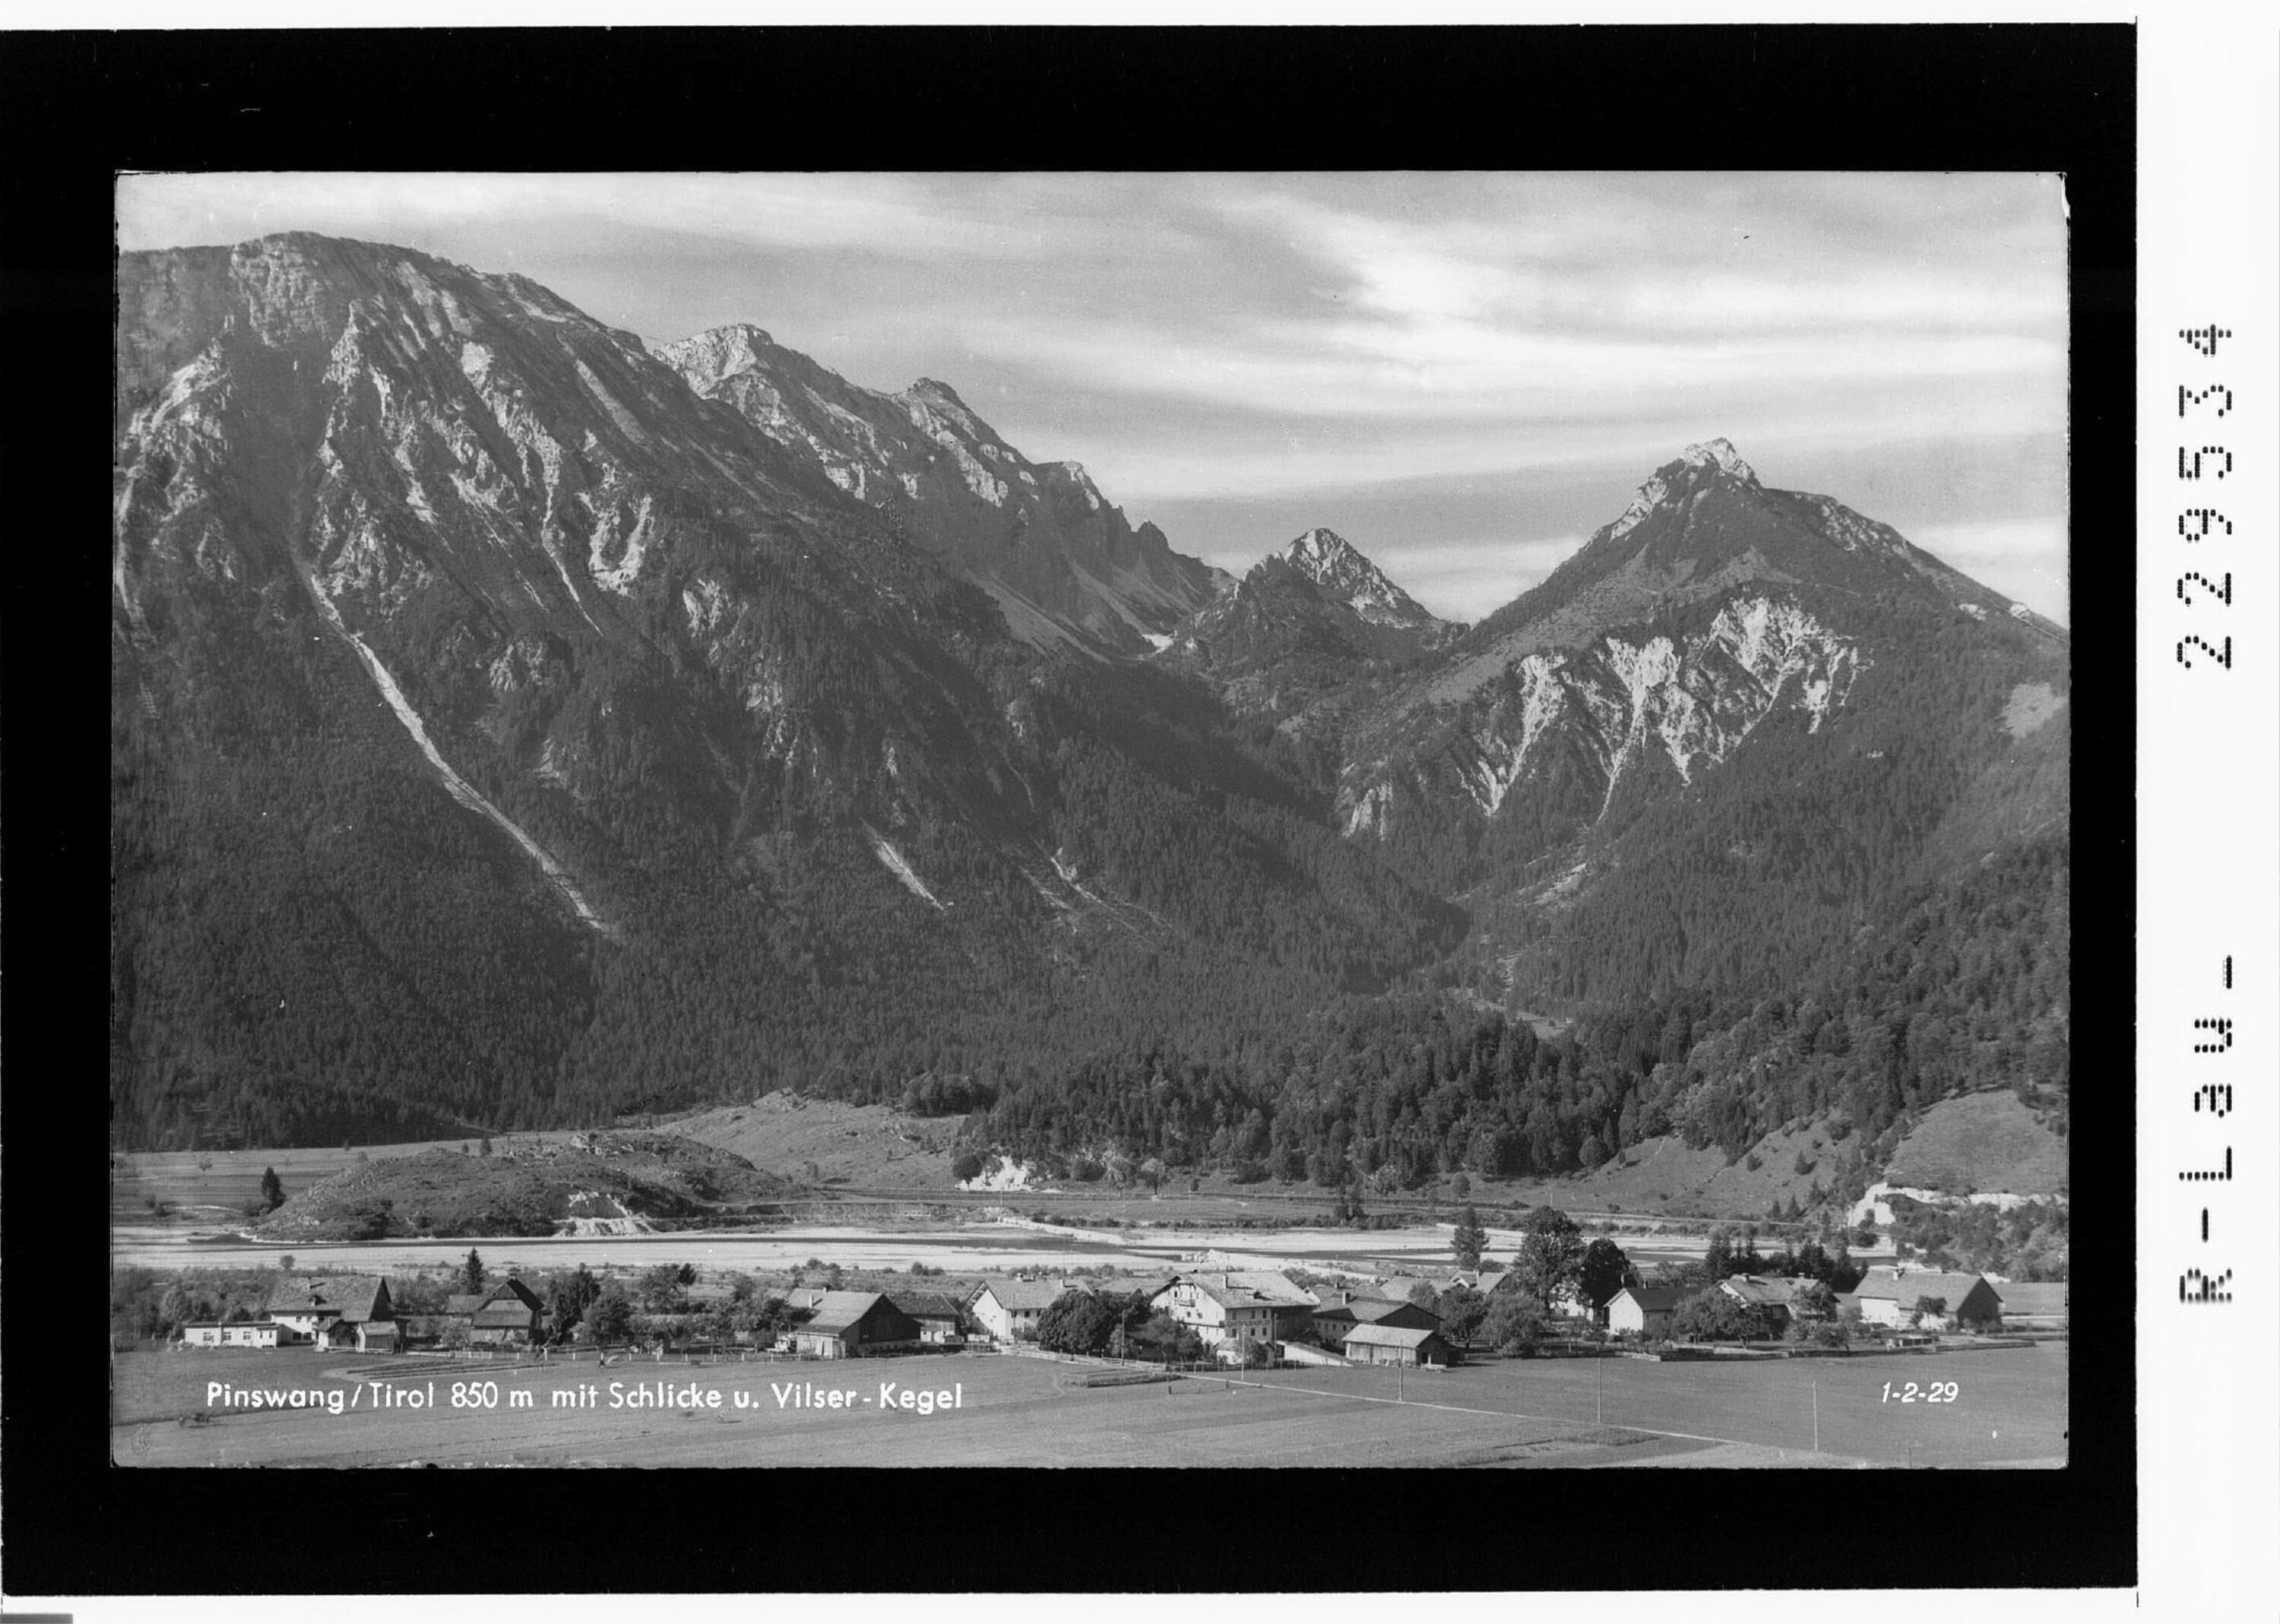 Pinswang / Tirol 850 m mit Schlicke und Vilser Kegel></div>


    <hr>
    <div class=